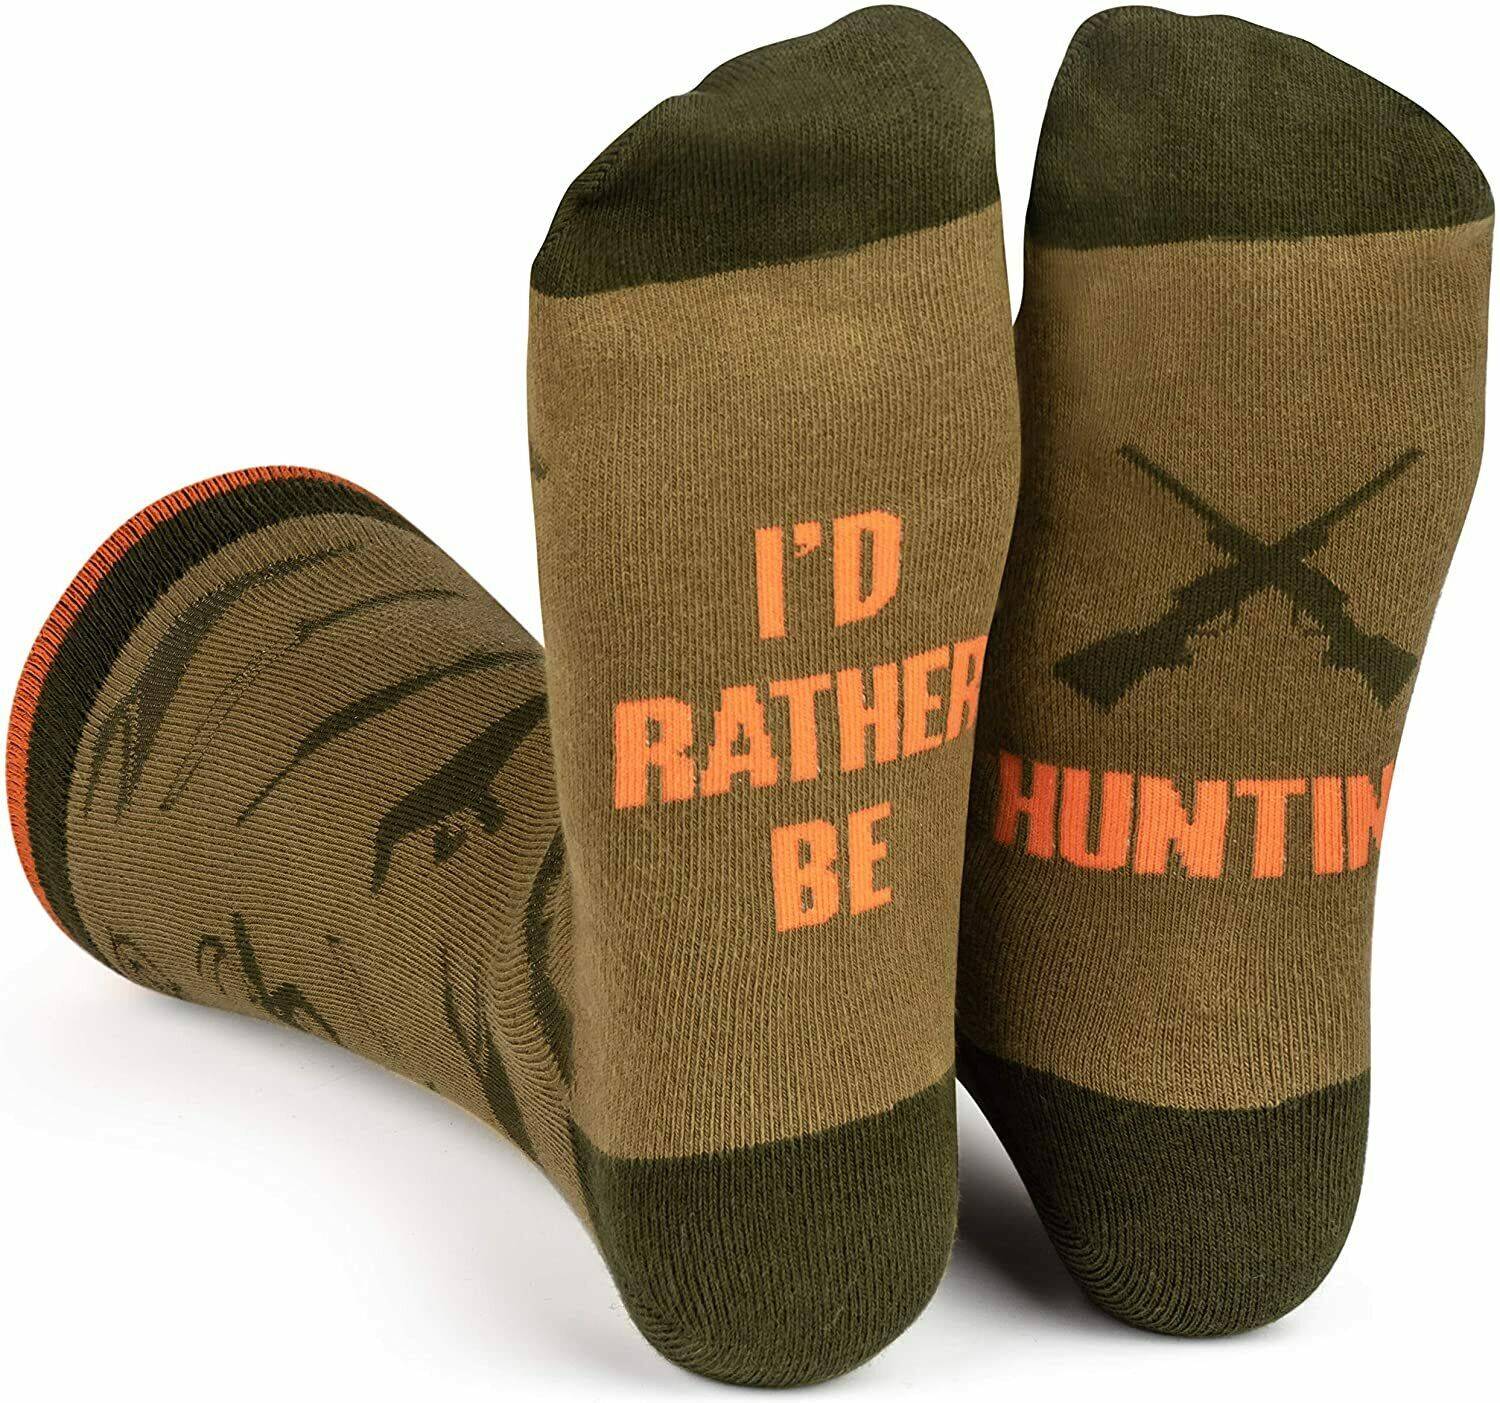 I'd Rather Be Socks as Funny Novelty Socks Stocking Stuffer Gifts For Men and Women